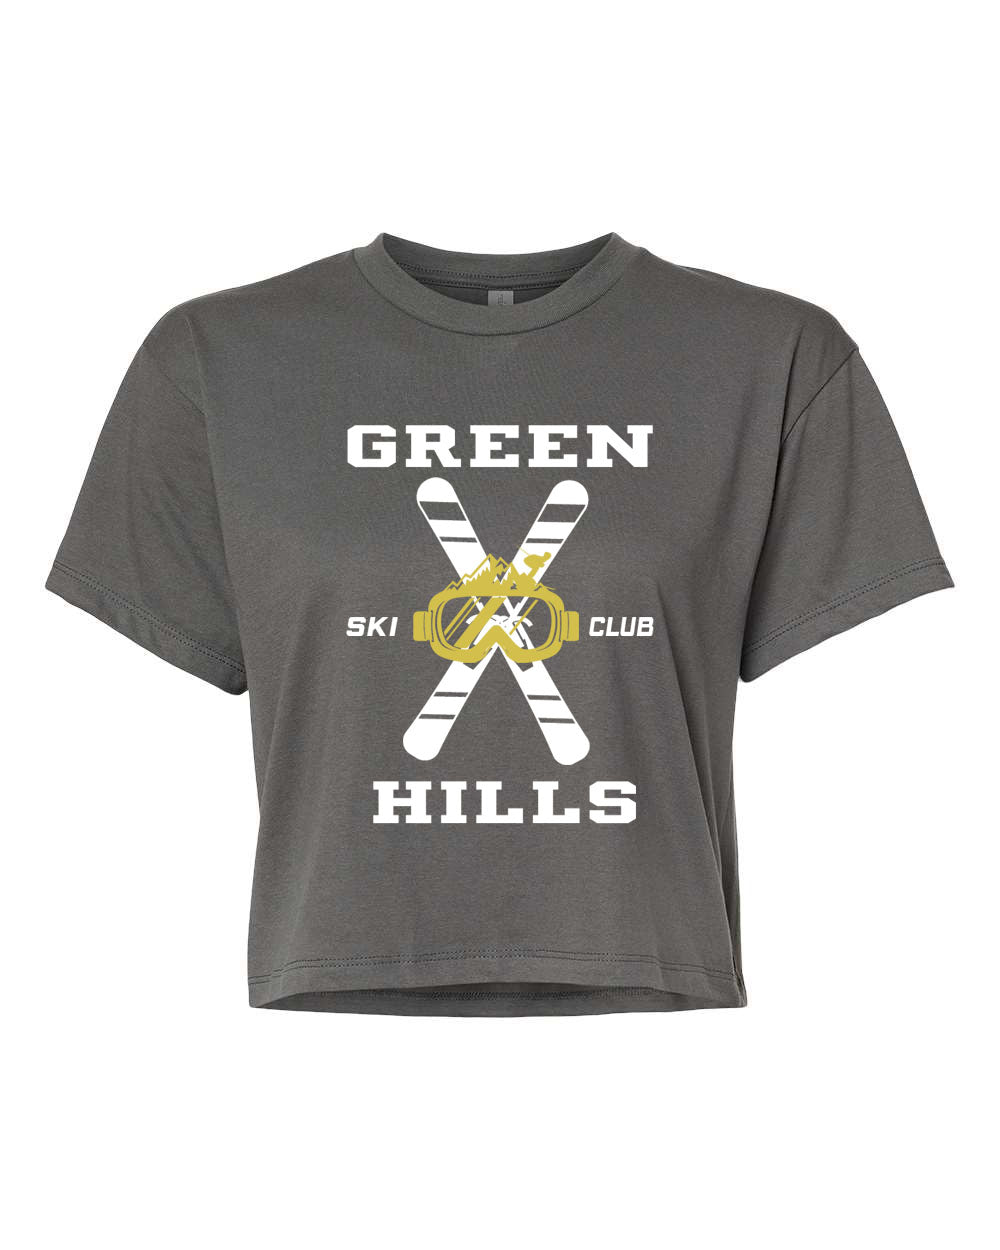 Green Hills Ski Club Design 2 crop top